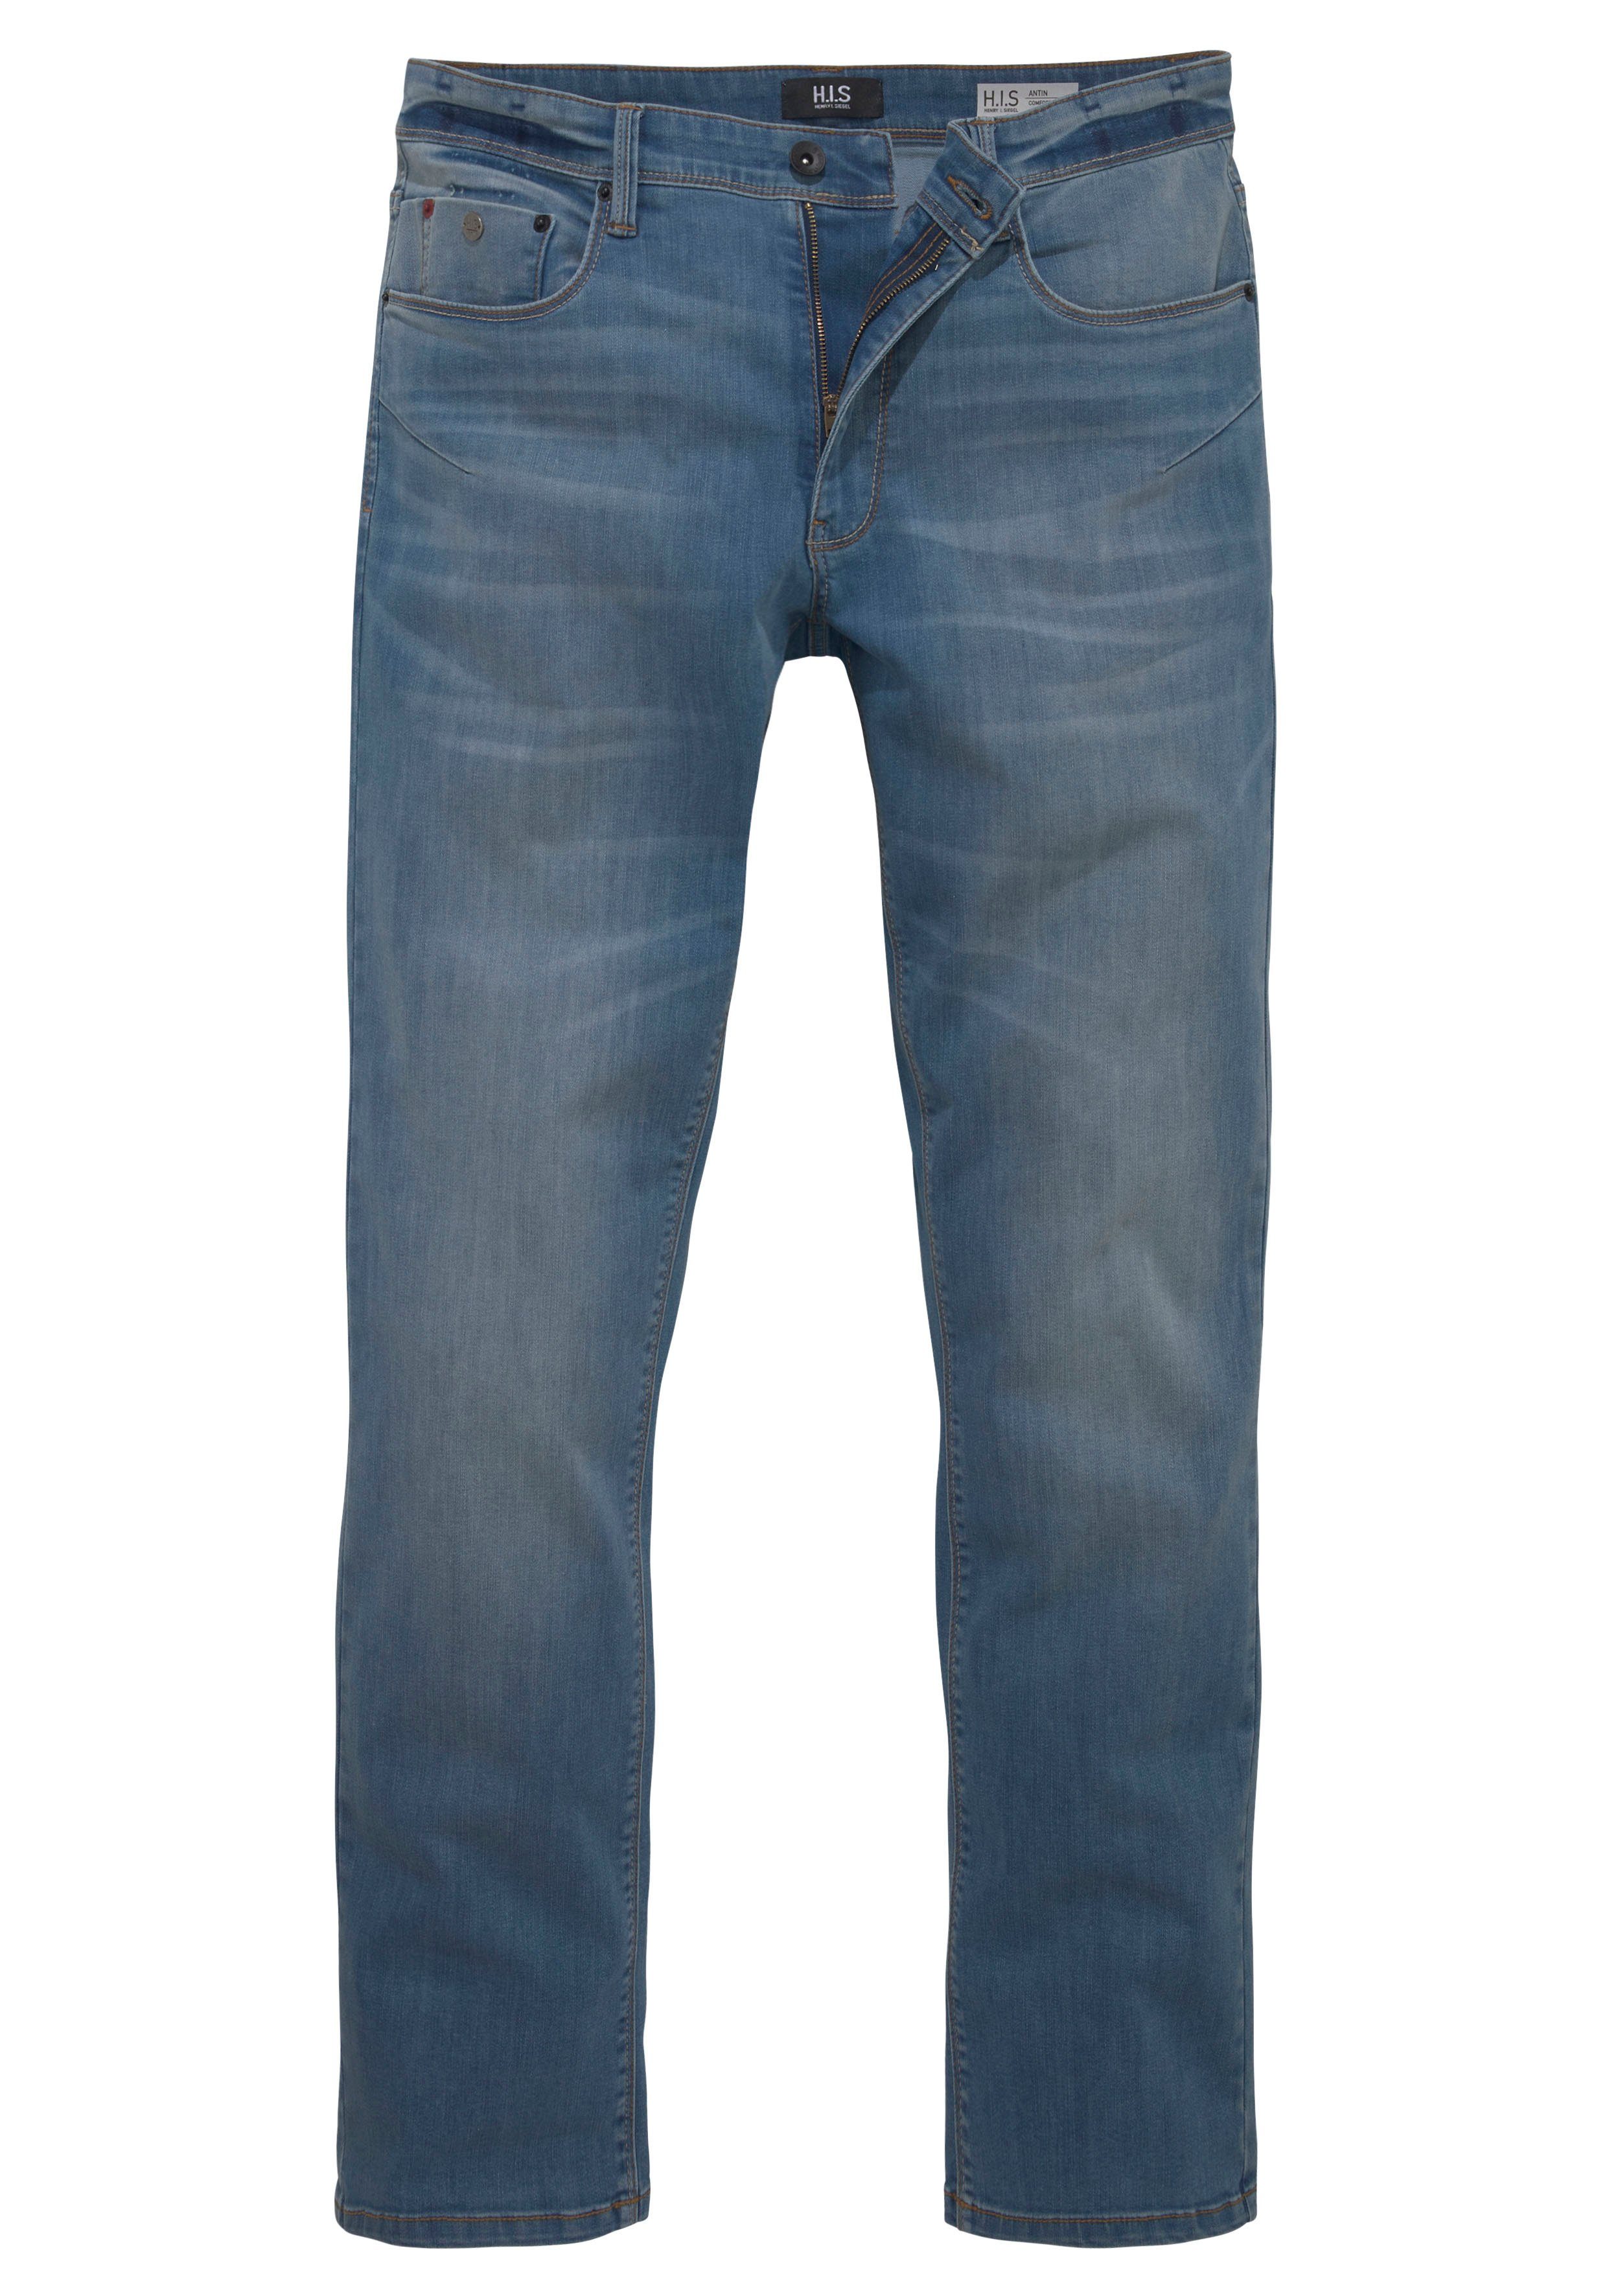 Wash Comfort-fit-Jeans blue-used H.I.S Ökologische, wassersparende Ozon durch Produktion ANTIN